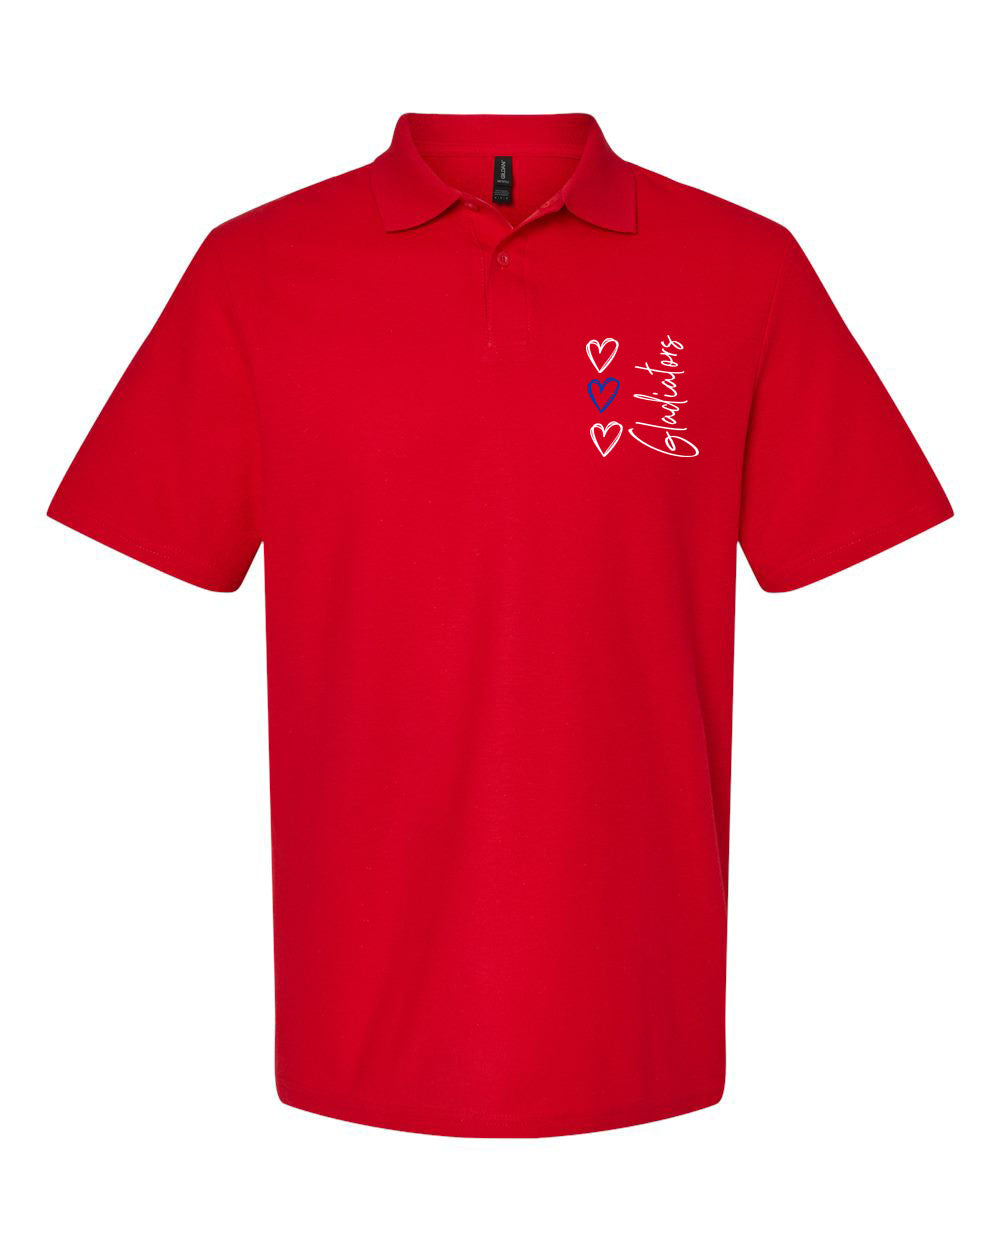 Goshen School Design 4 Polo T-Shirt